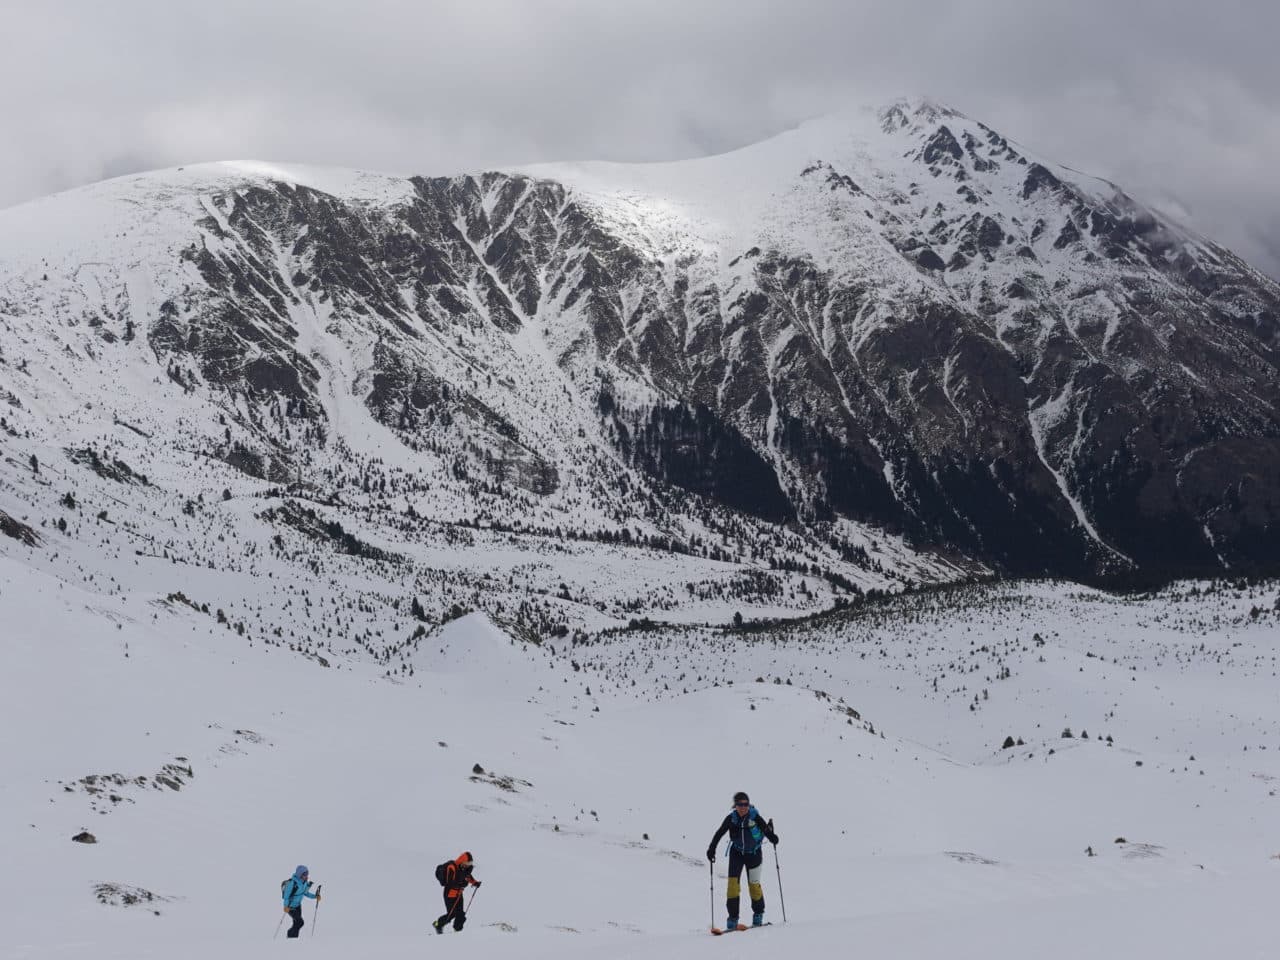 Kosovo ski randonnée helyum.ch ambiance agréable